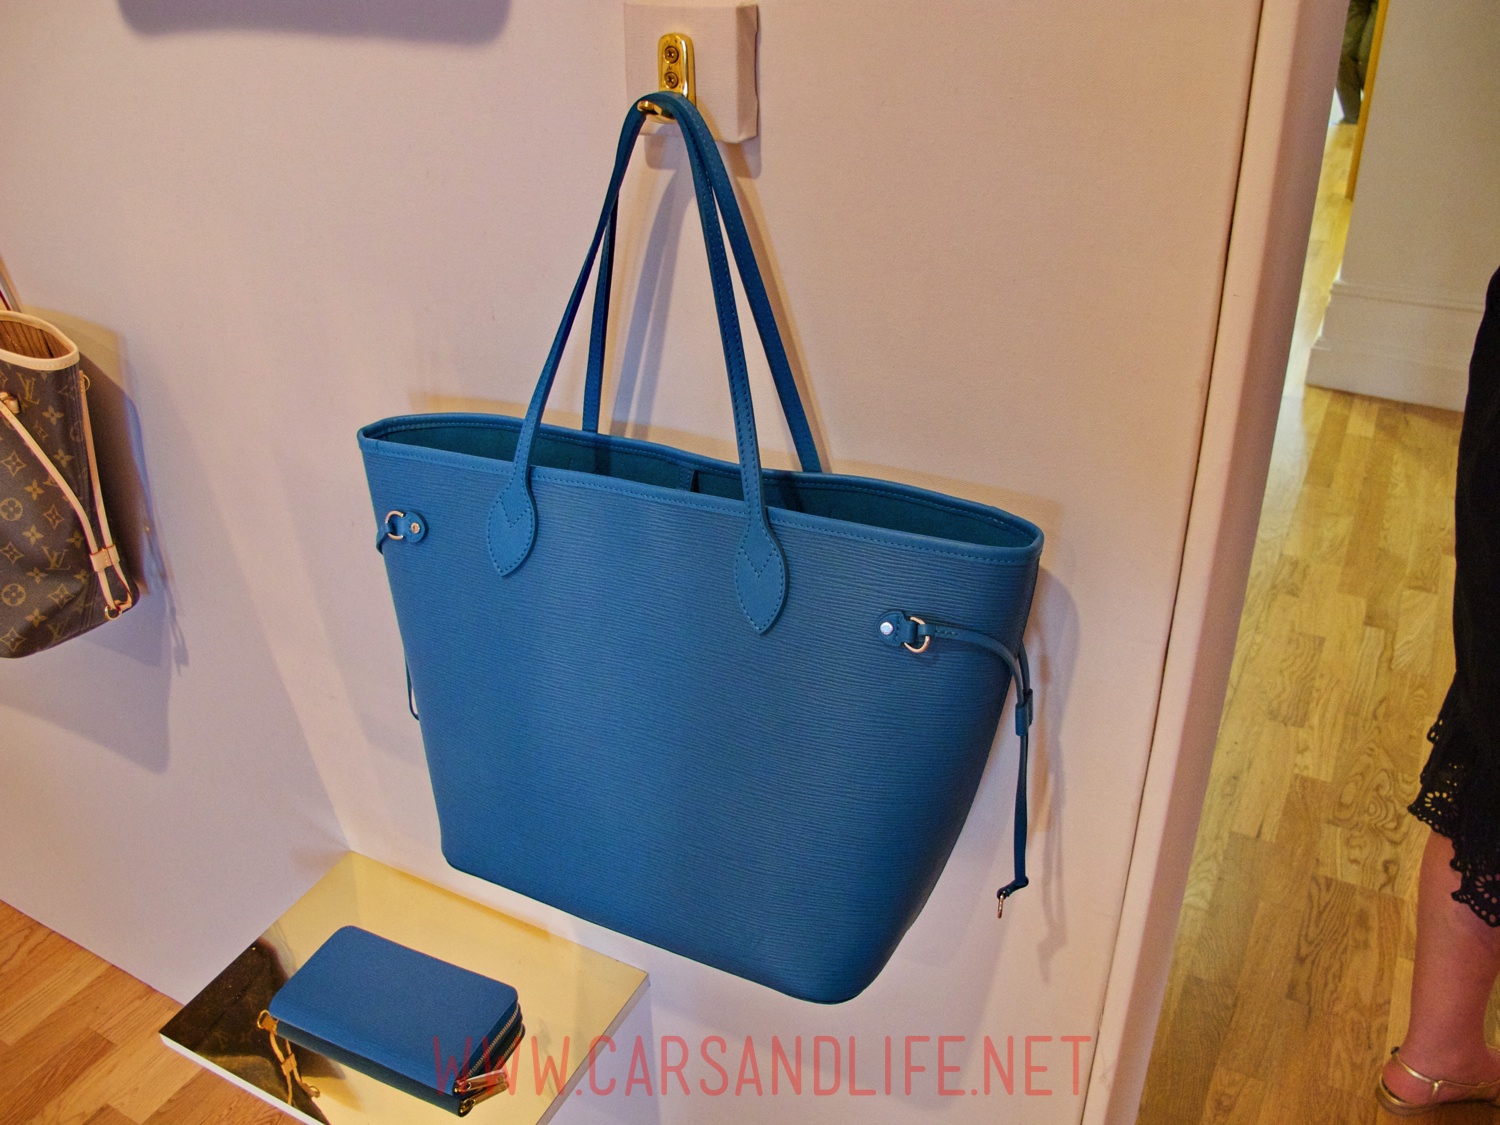 Louis Vuitton Cruise 2014 Handbag Collection - cars & life | cars fashion lifestyle blog